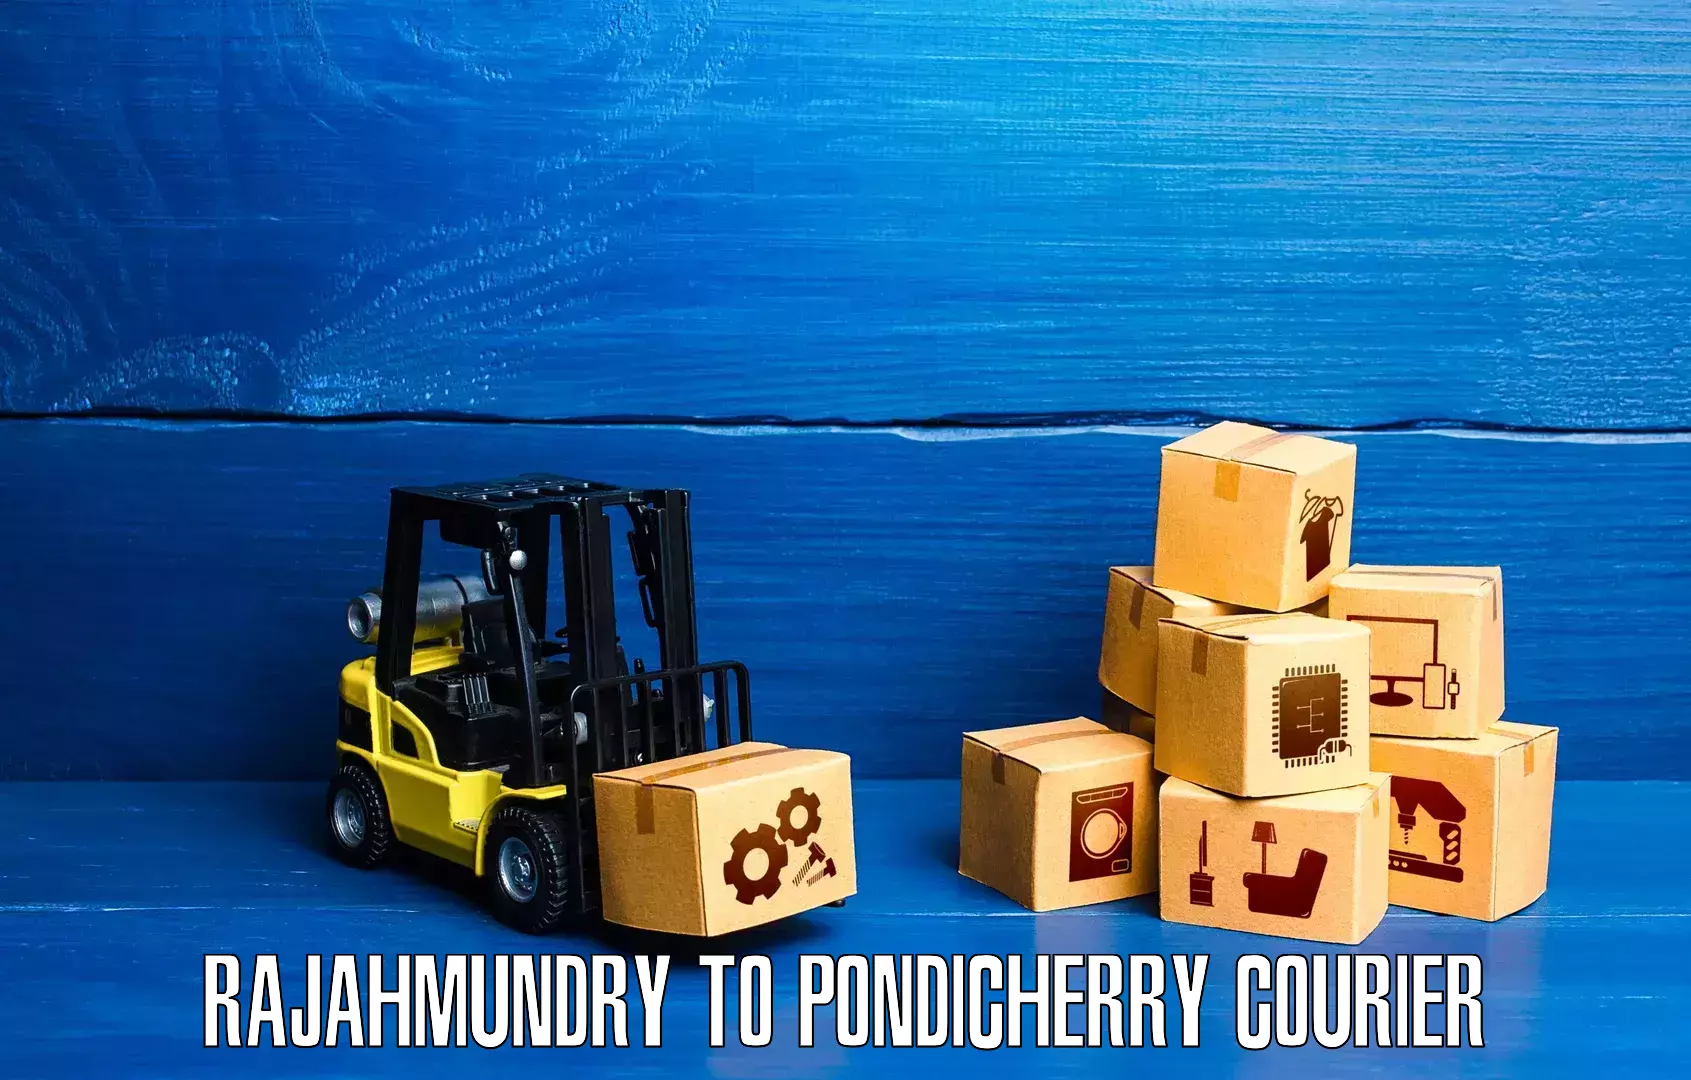 Comprehensive shipping network Rajahmundry to Pondicherry